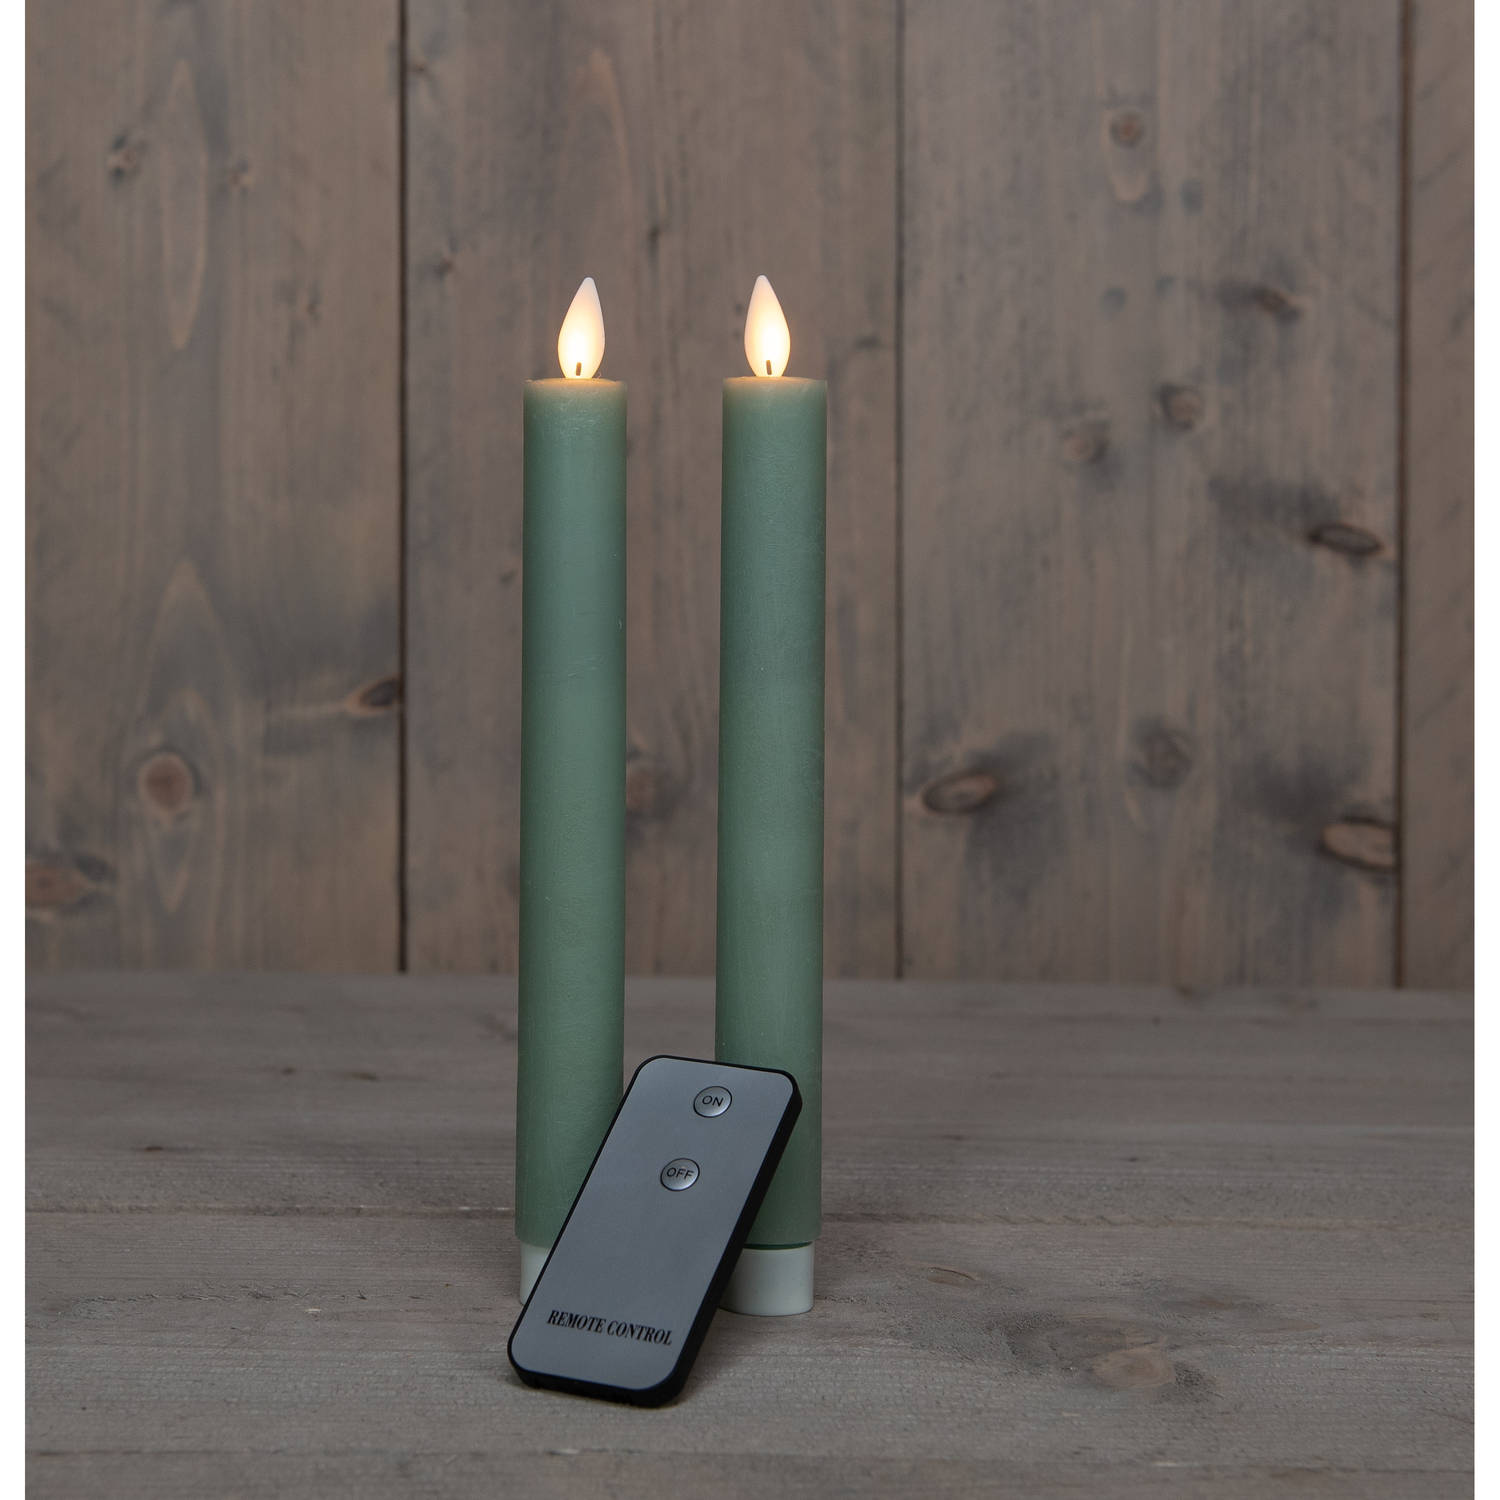 Skalk Versterken Mantel Kaarsen set van 2x stuks Led dinerkaarsen jade groen inclusief  afstandsbediening 23 cm - LED kaarsen | Blokker